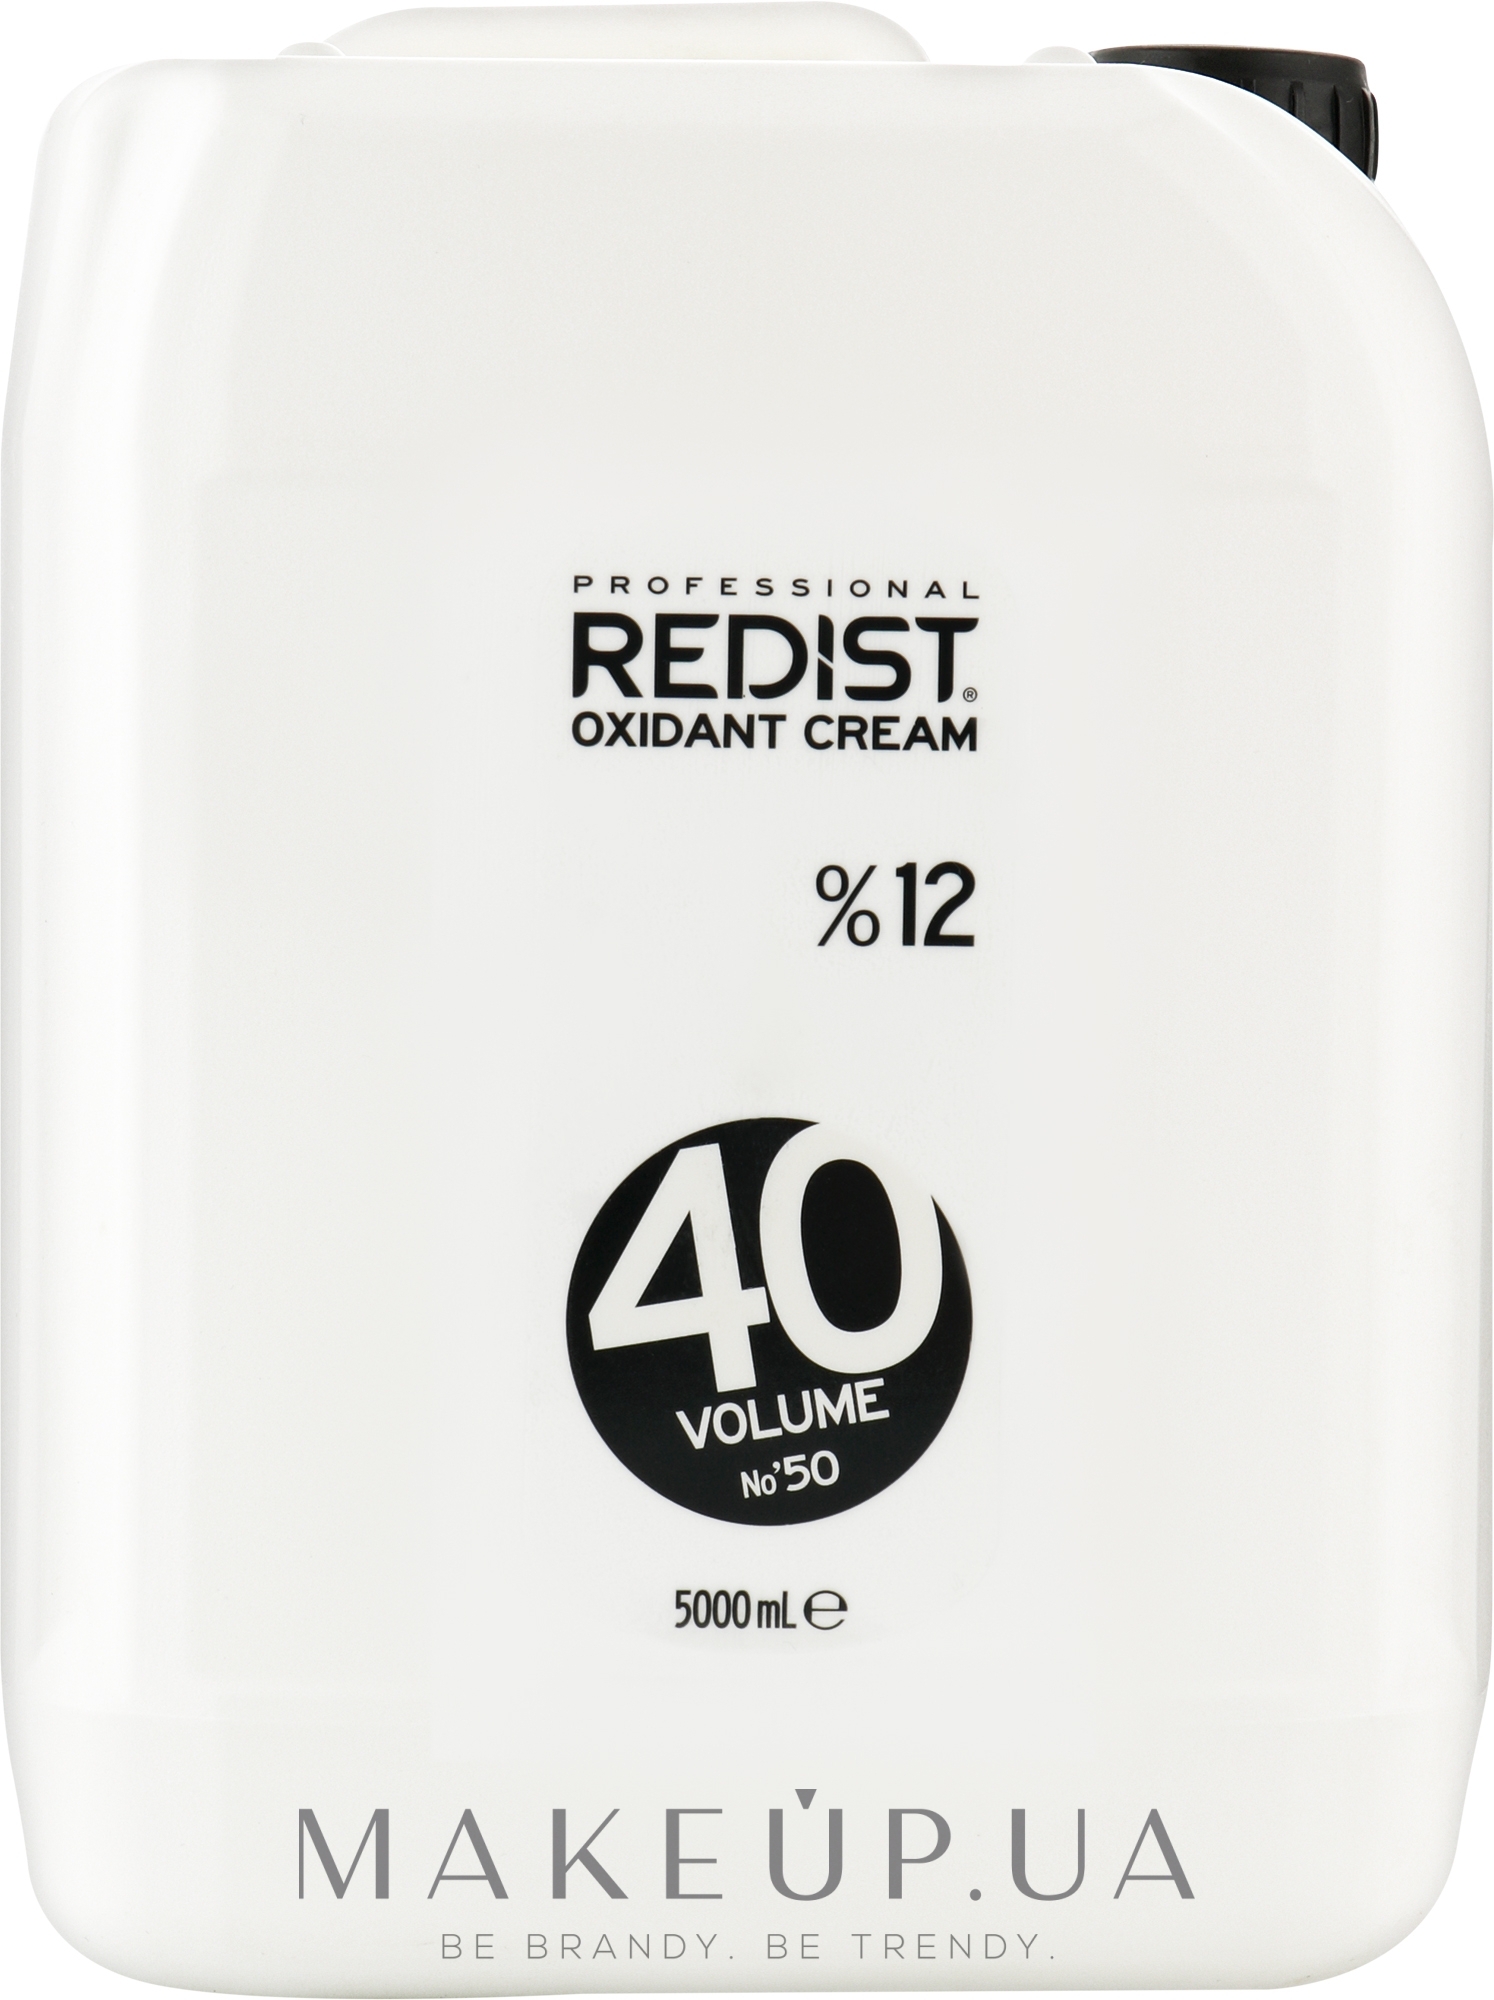 Крем оксидант 12% - Redist Professional Oxidant Cream 40 Vol 12% — фото 5000ml